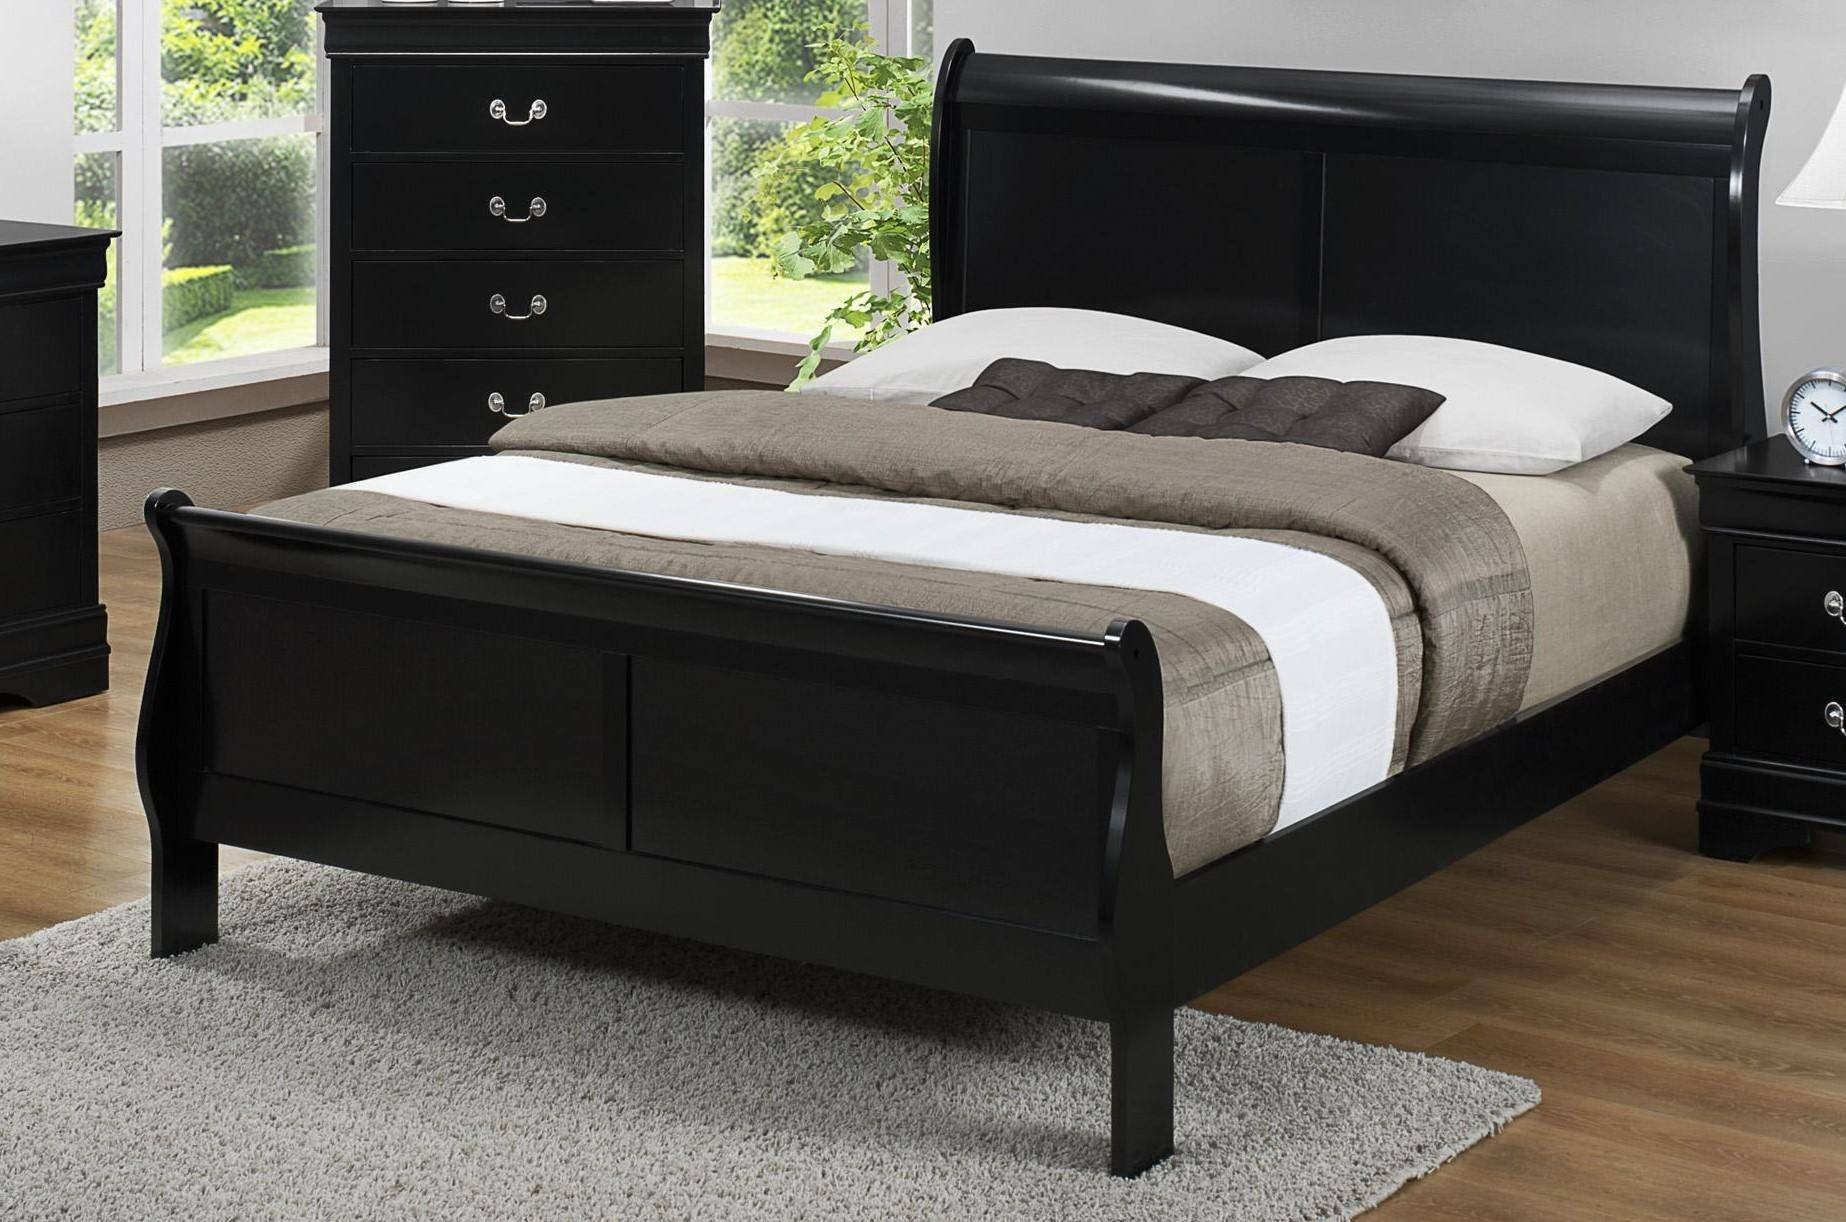 Black Bedroom Furniture Decor New Crown Mark B3900 Louis Philip Modern Black Finish Queen Size